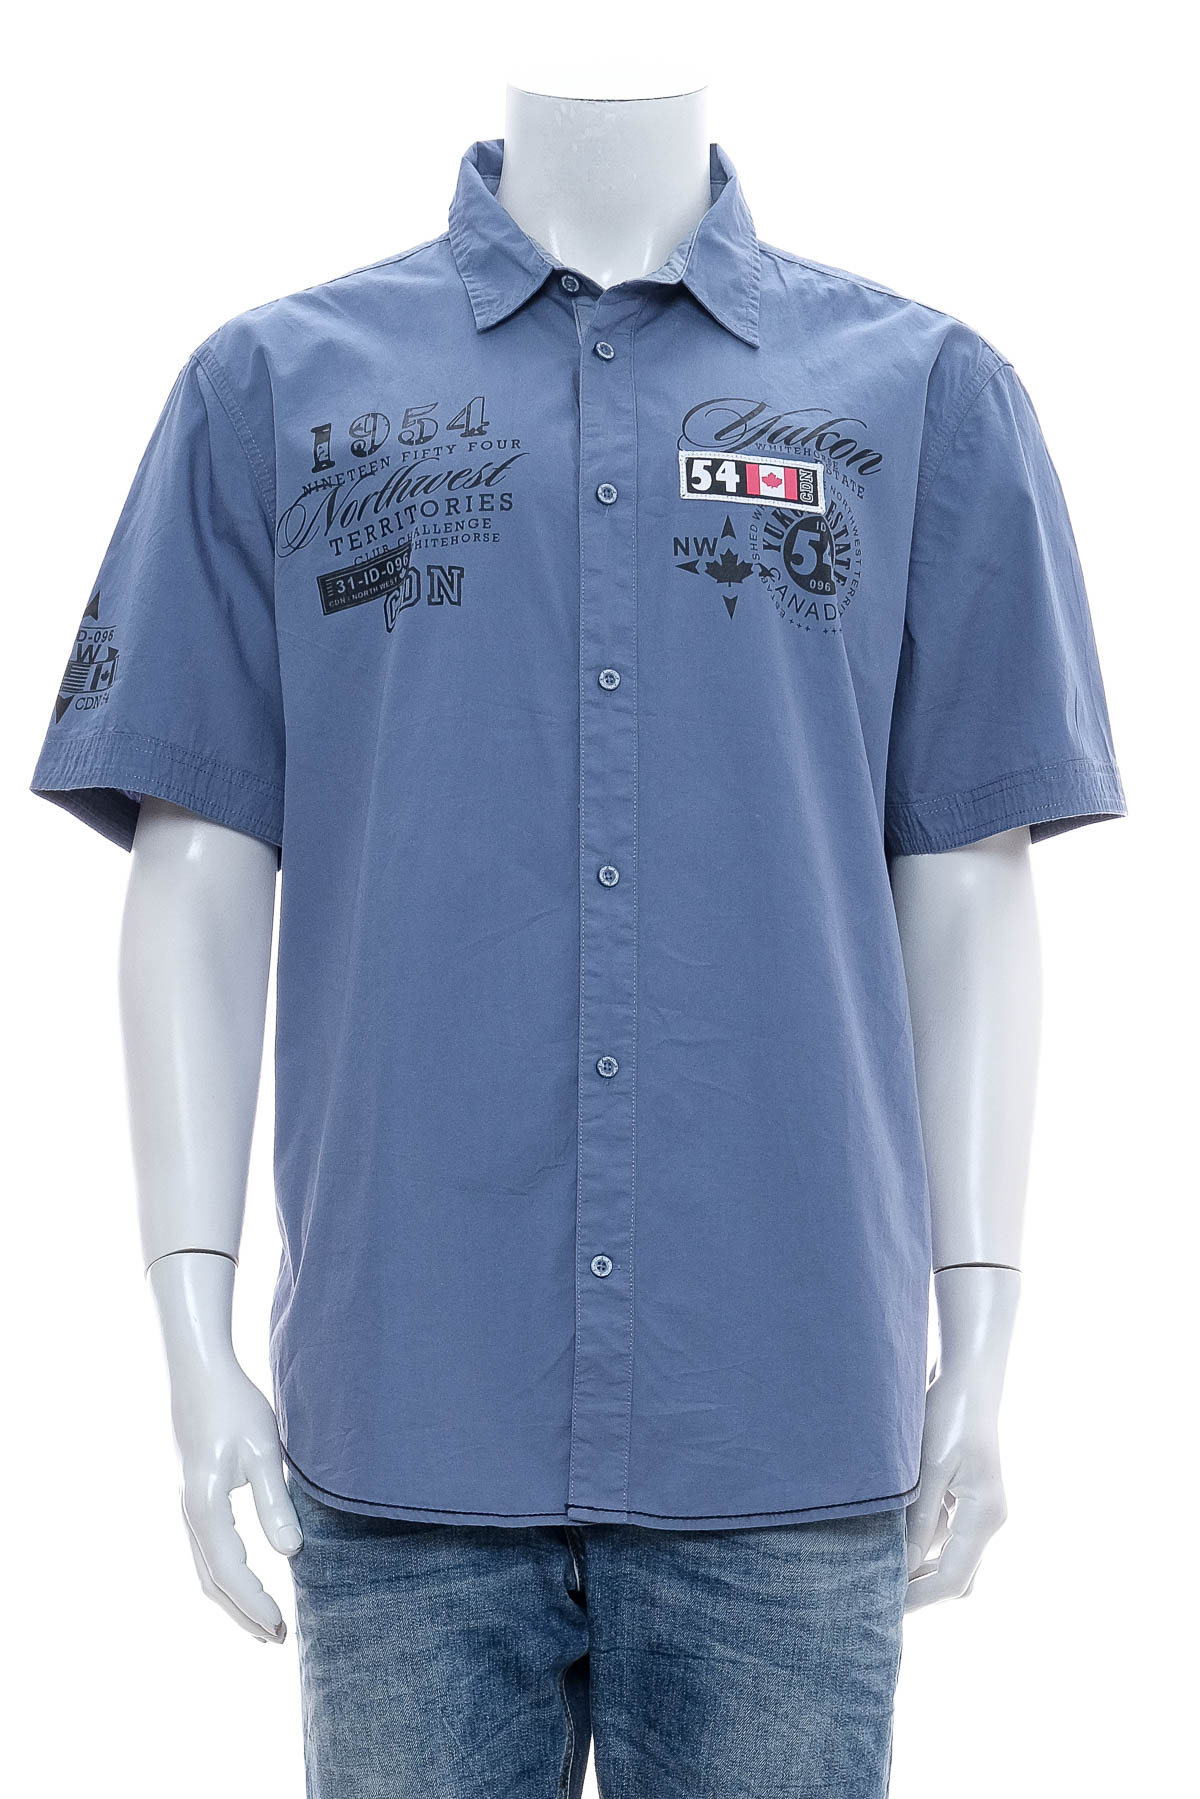 Men's shirt - Bpc selection bonprix collection - 0